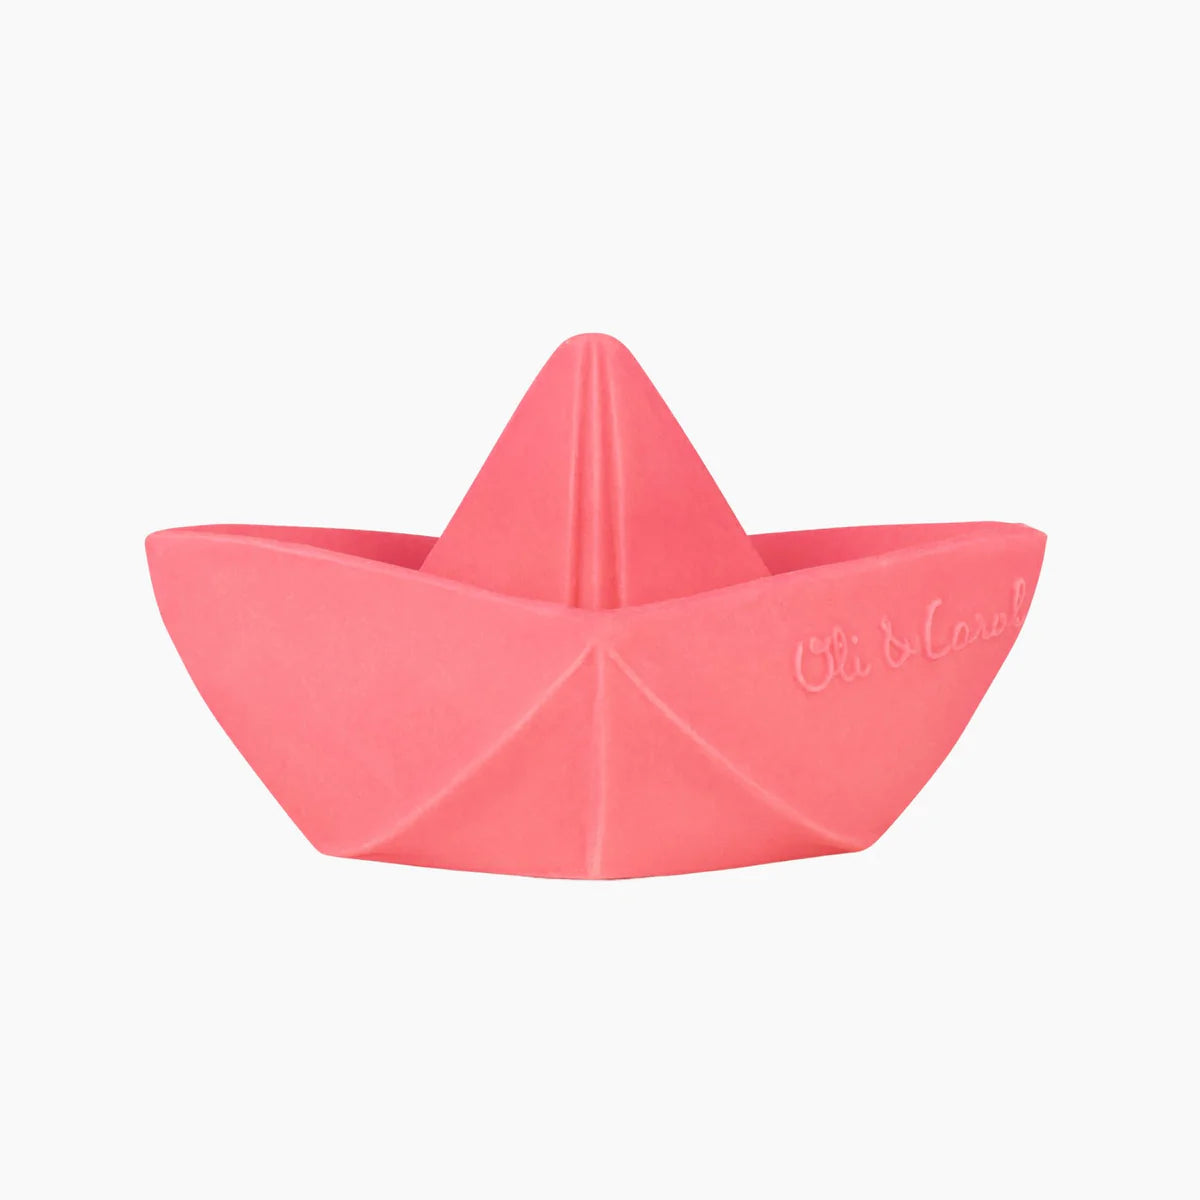 Origami Boat Bath Toy - Pink